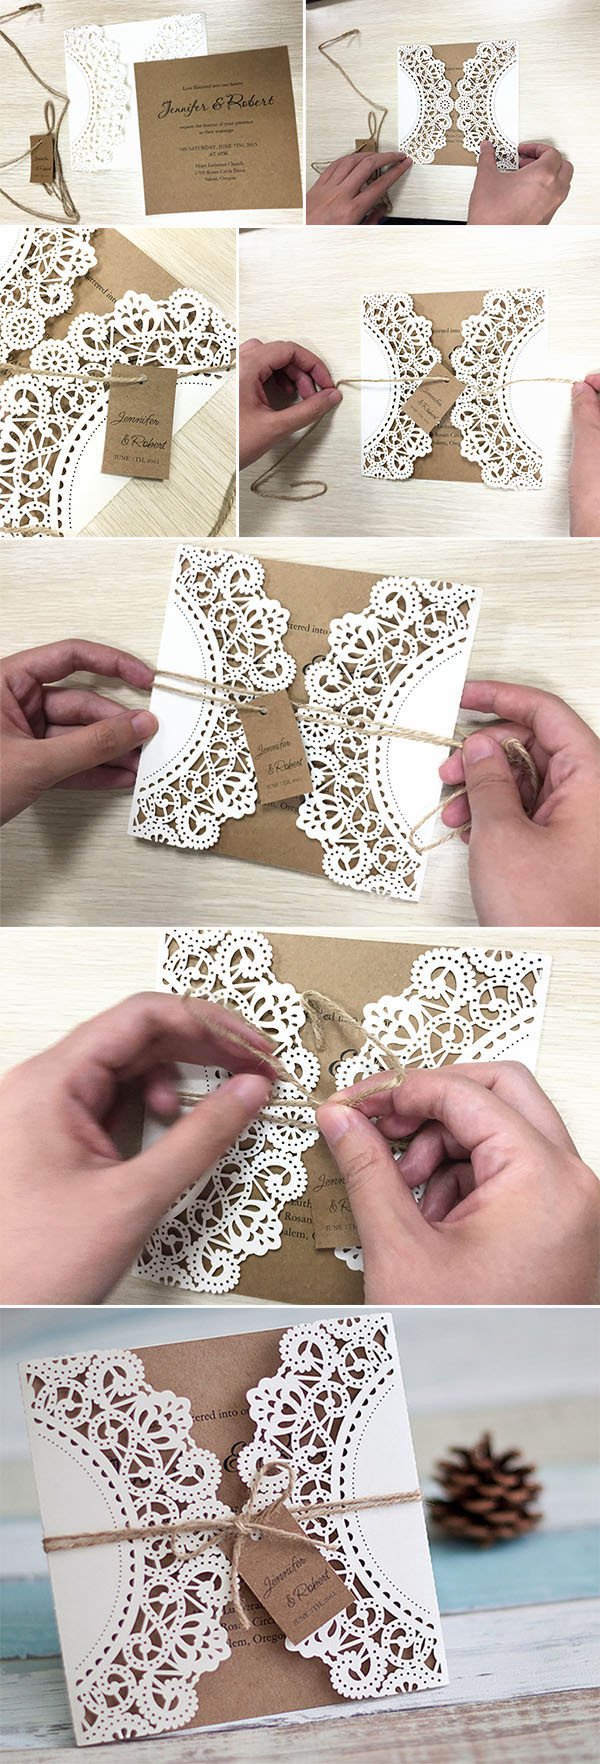 DIY Country Wedding
 DIY Wedding Ideas 10 Perfect Ways To Use Paper For Weddings